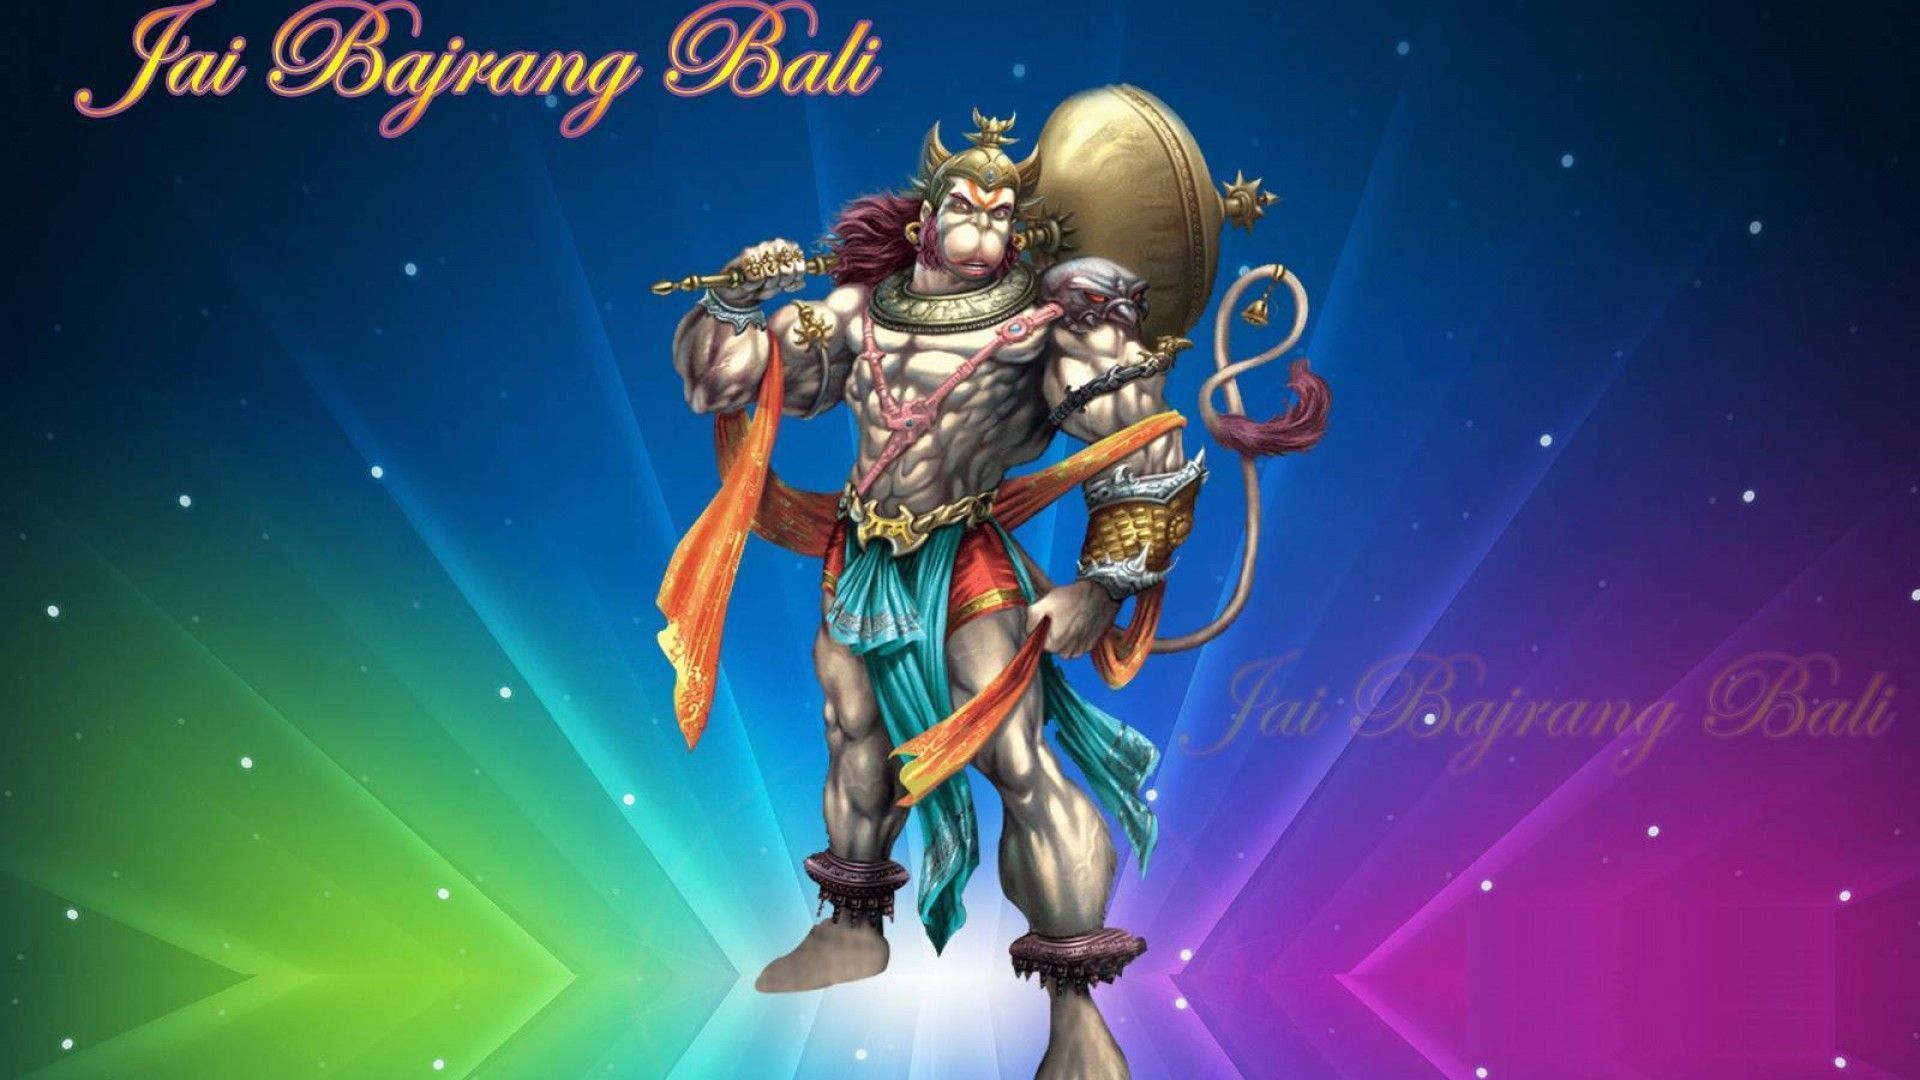 1920x1080 Lord Hanuman Jai Shri Bajrang Bali 3d Hd Wallpaper For